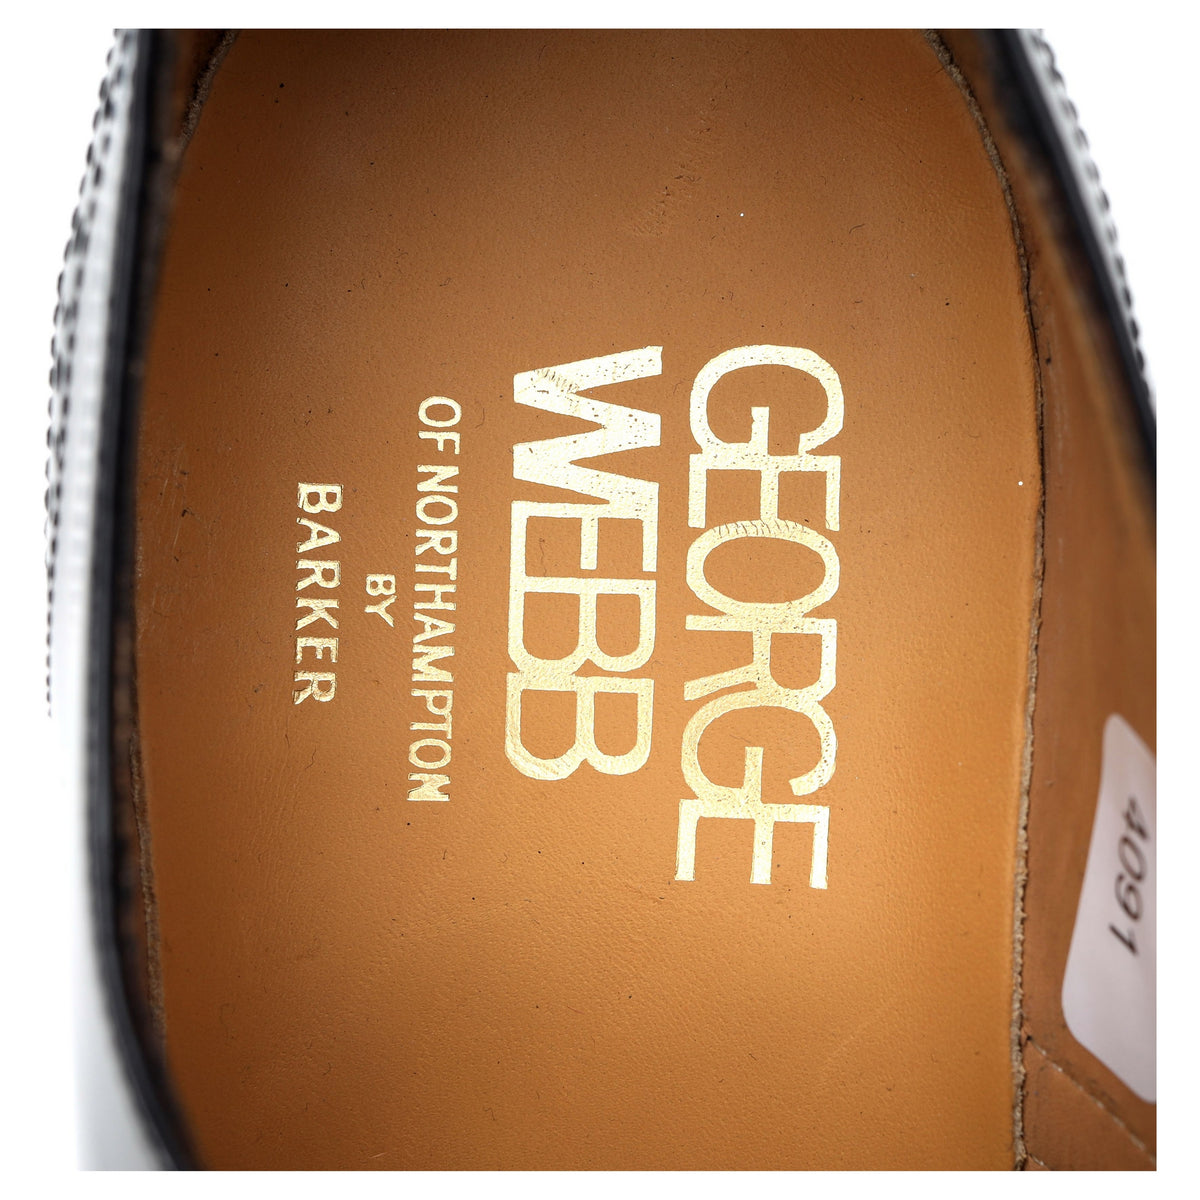 George Webb Black Leather Oxford Brogues UK 6.5 G